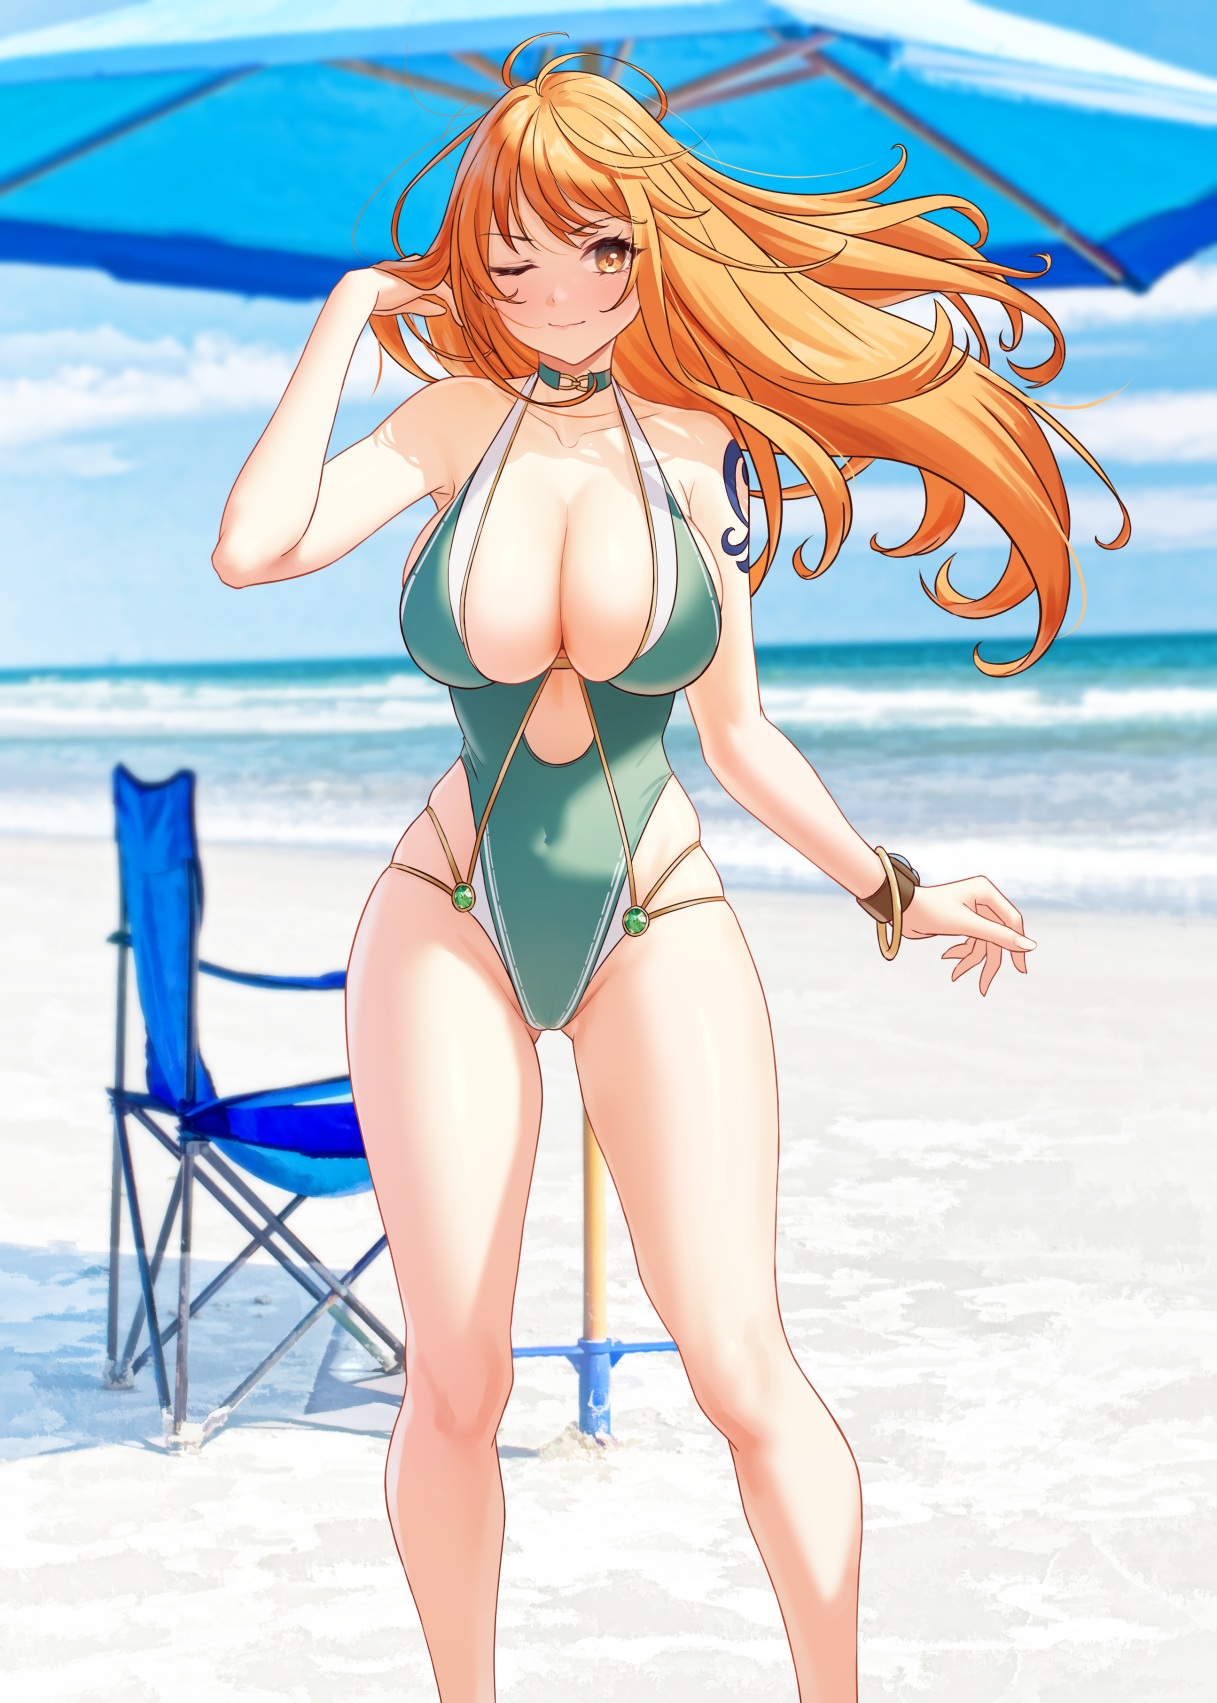 Anime 1217x1703 anime anime girls Nami redhead big boobs blushing sand beach one-piece swimsuit One Piece cleavage